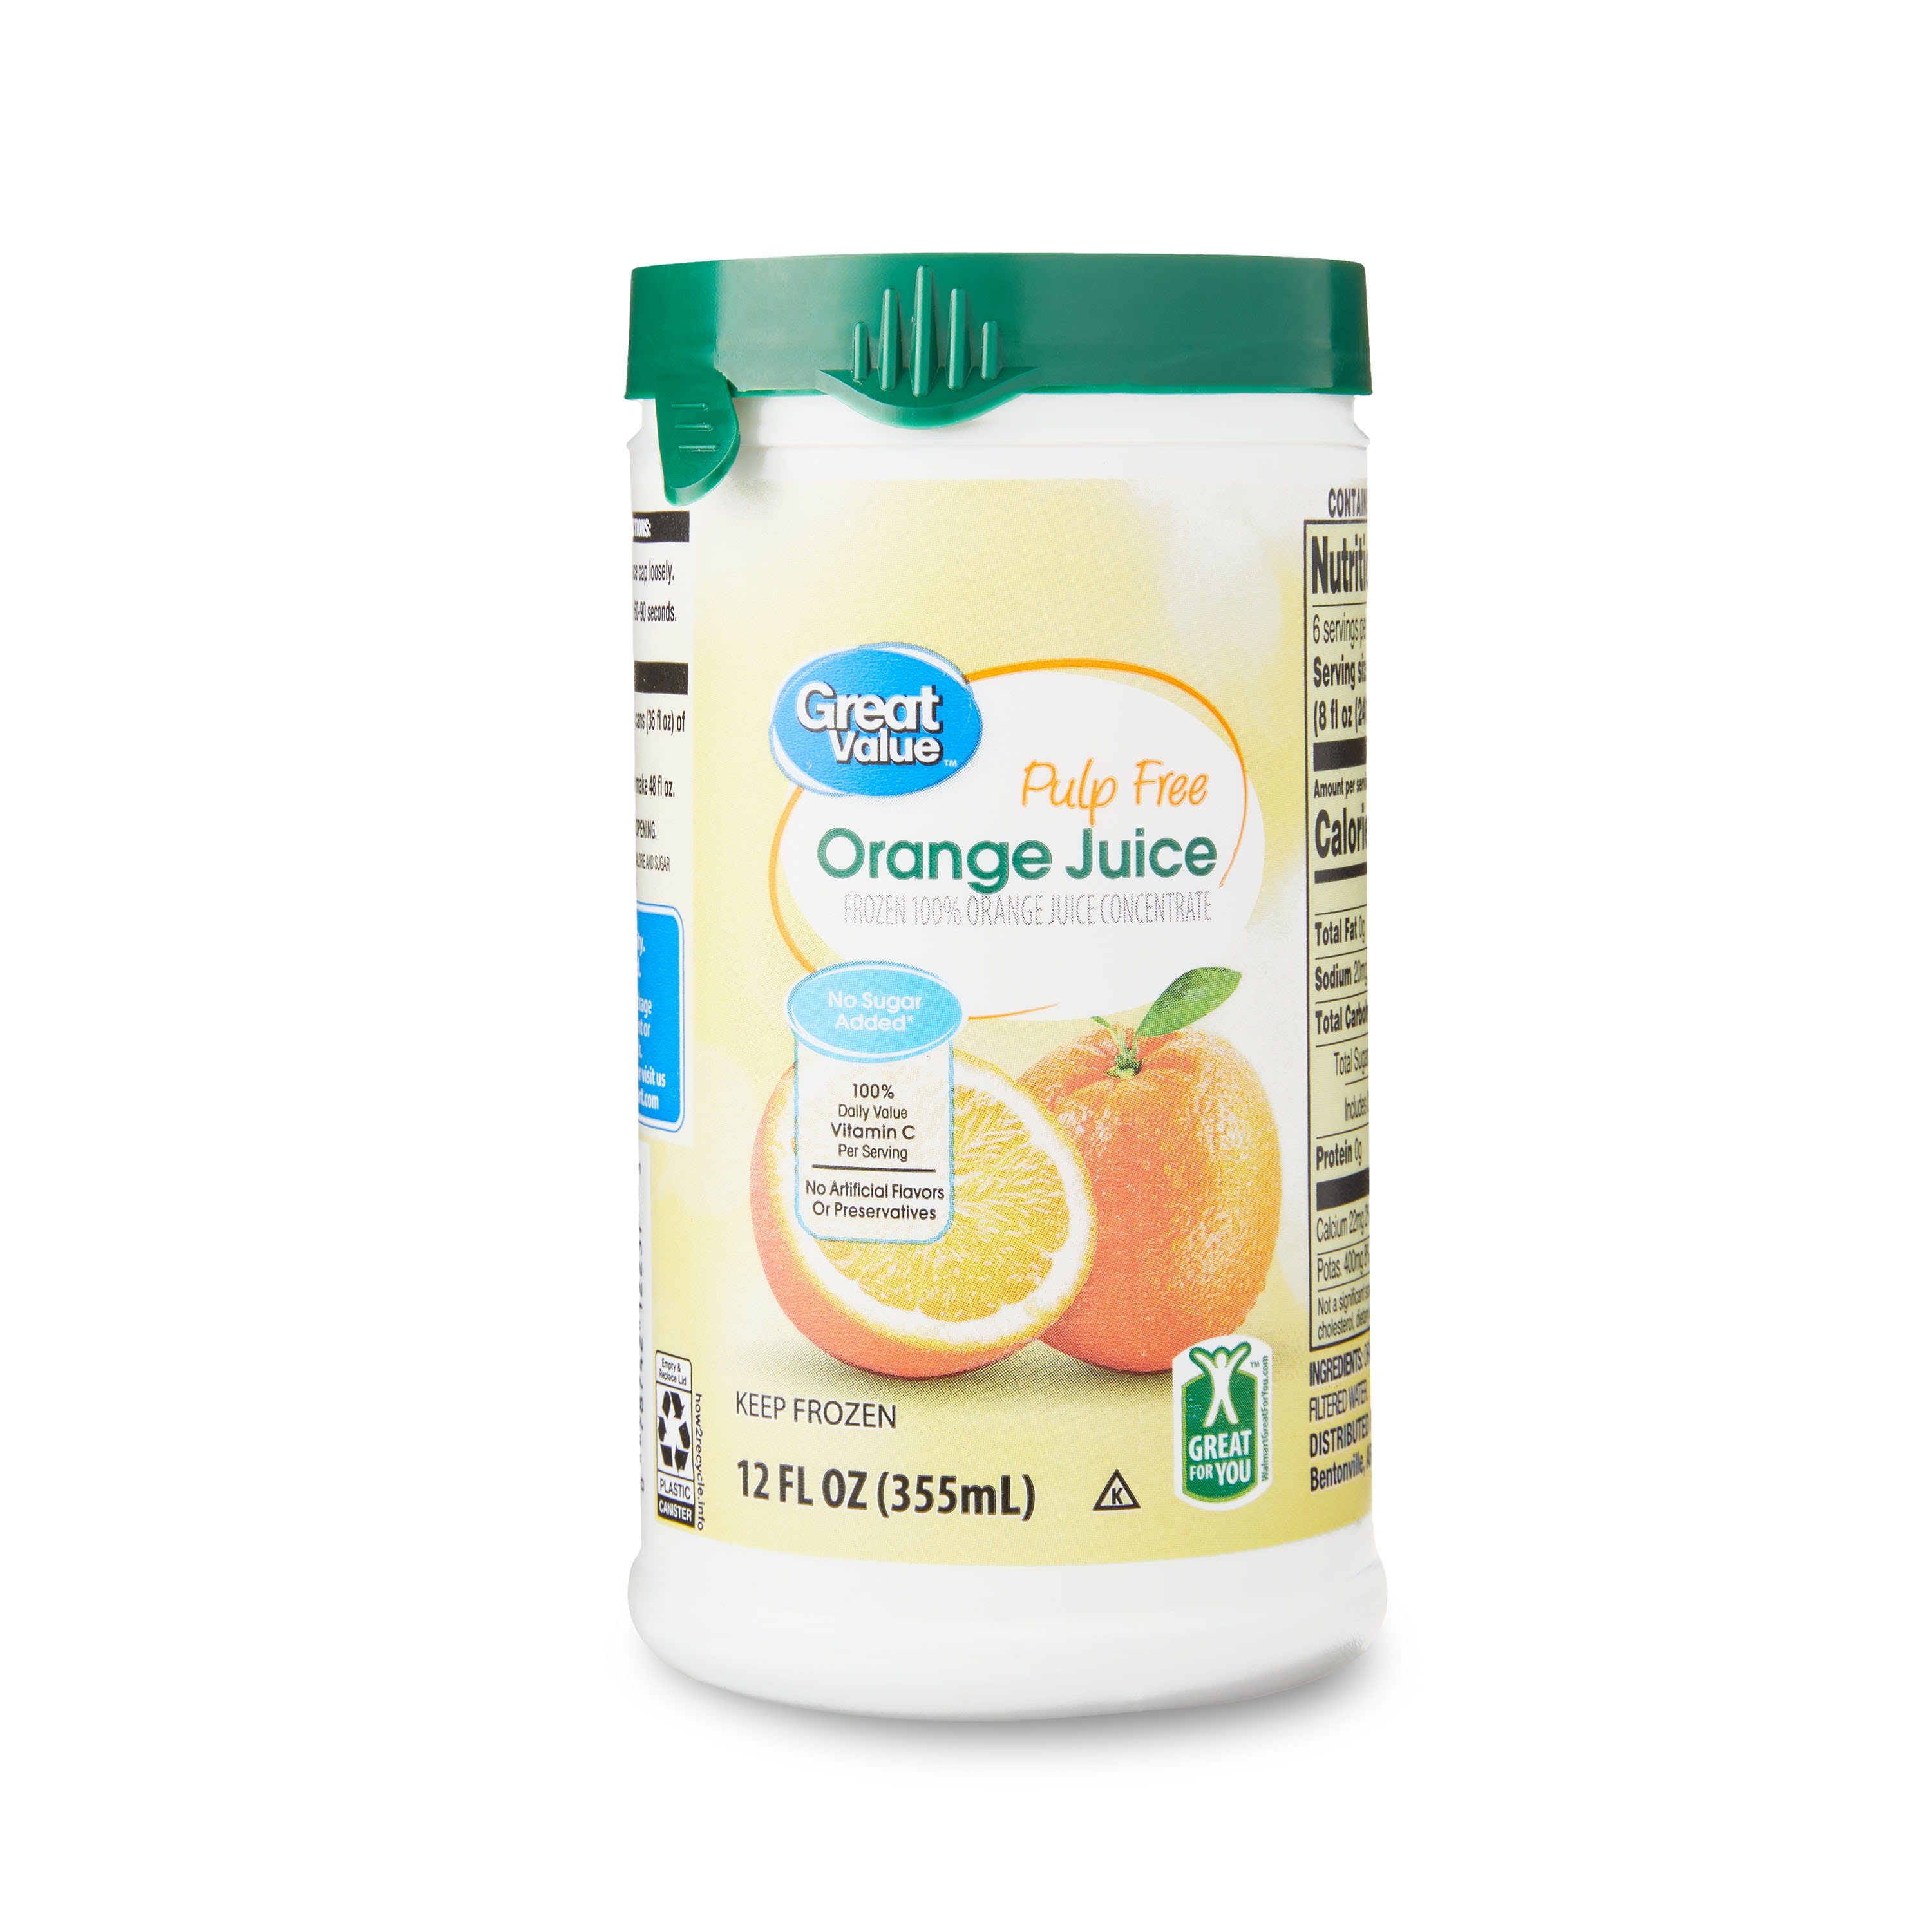 UNITED DAIRY 100% Pure Orange Juice 1 GAL PLASTIC JUG, Orange